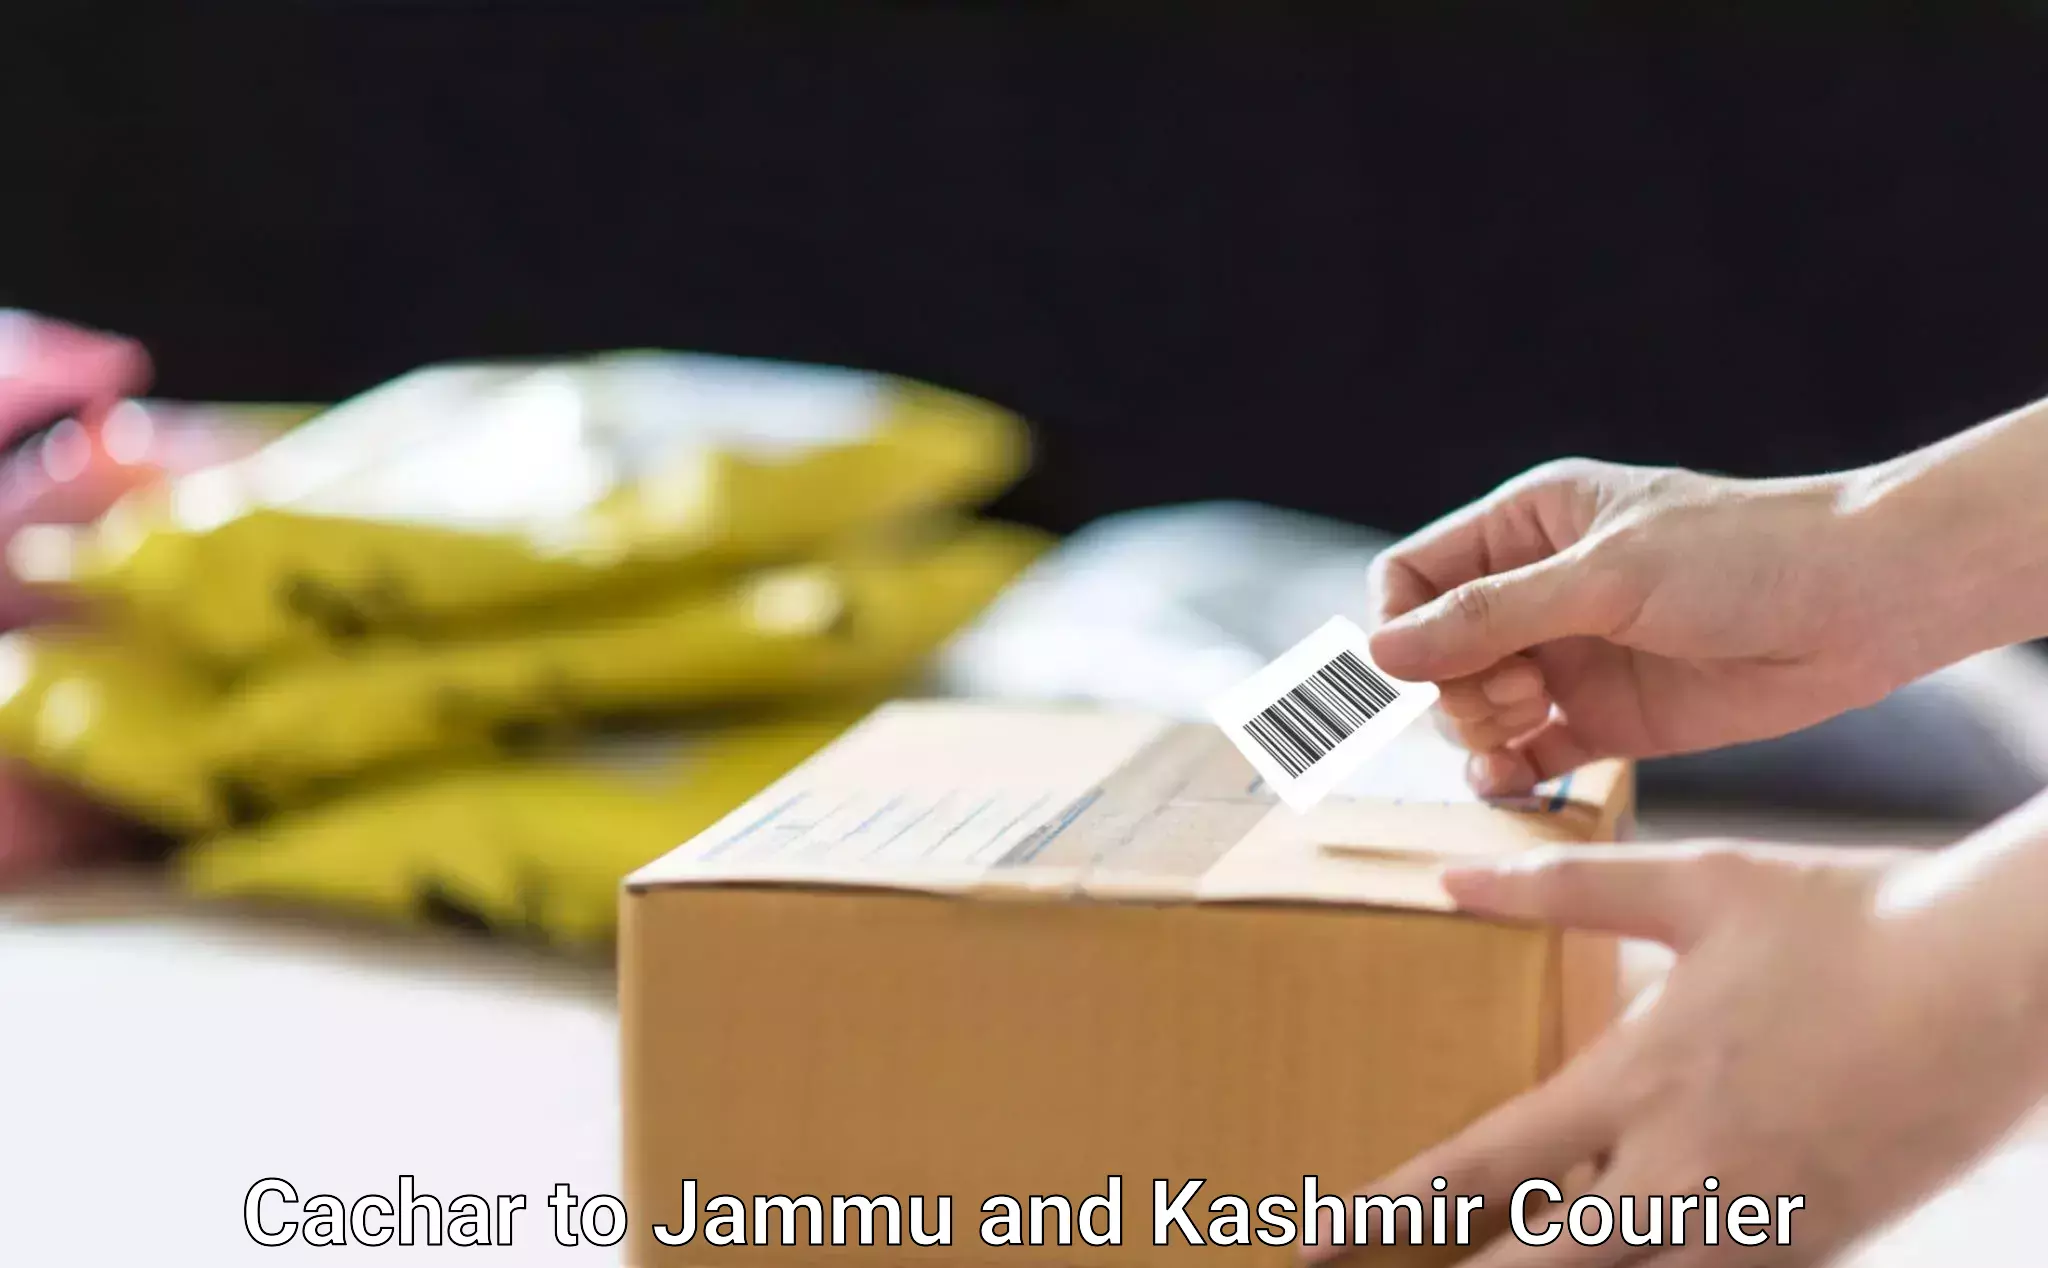 Supply chain delivery Cachar to Srinagar Kashmir